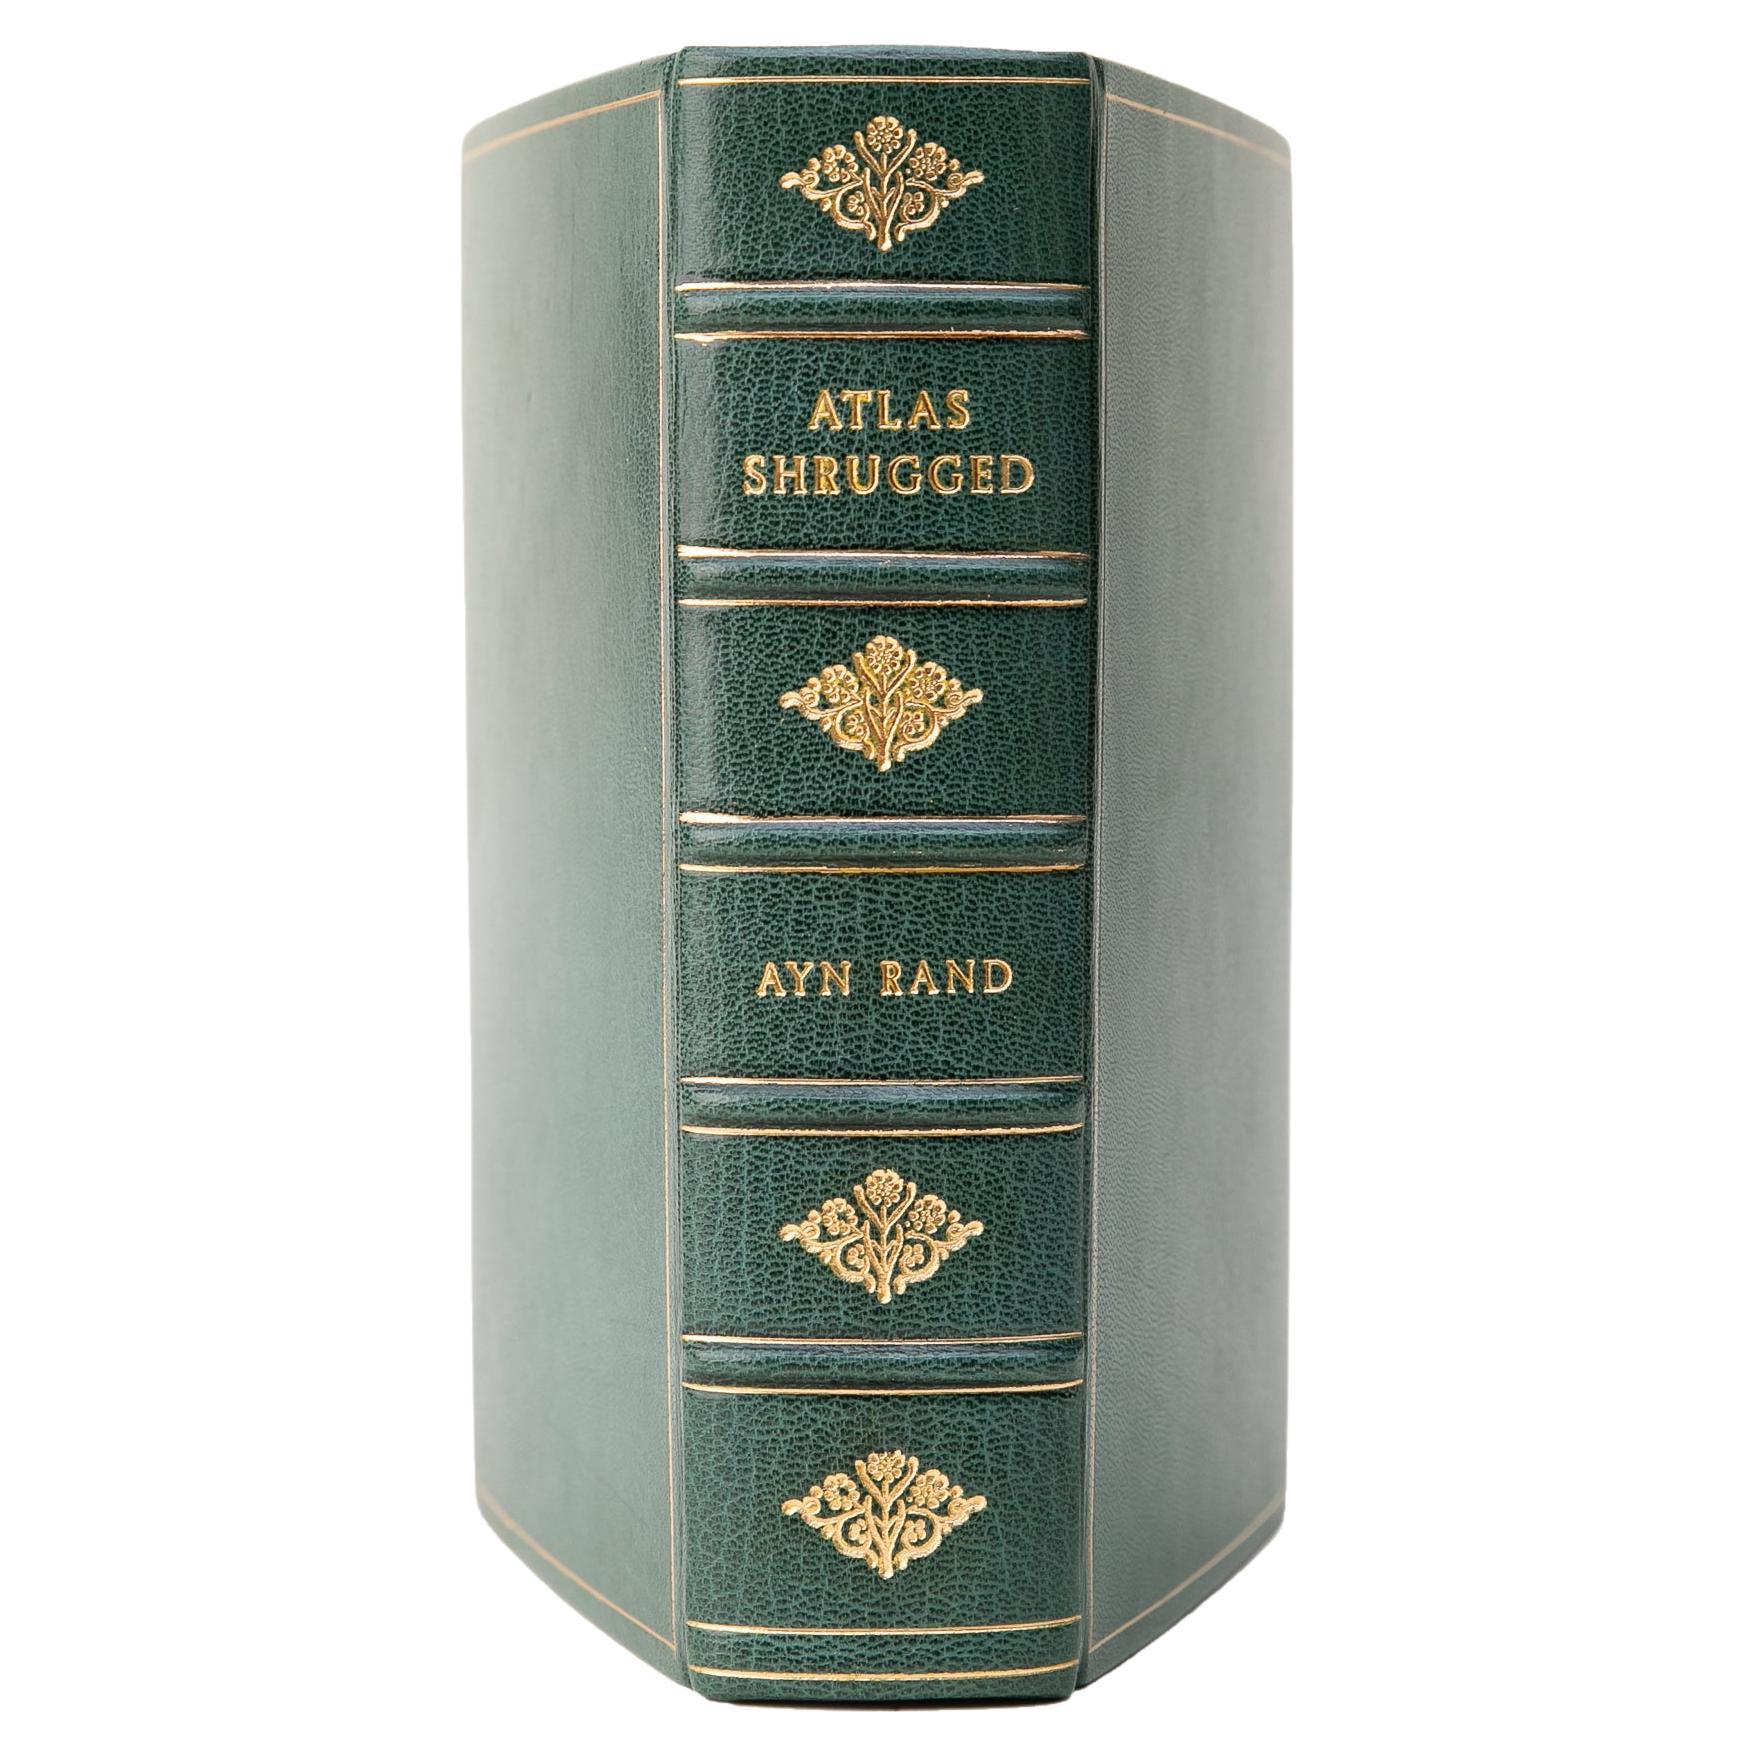 1 Volume. Ayn Rand, Atlas Shrugged